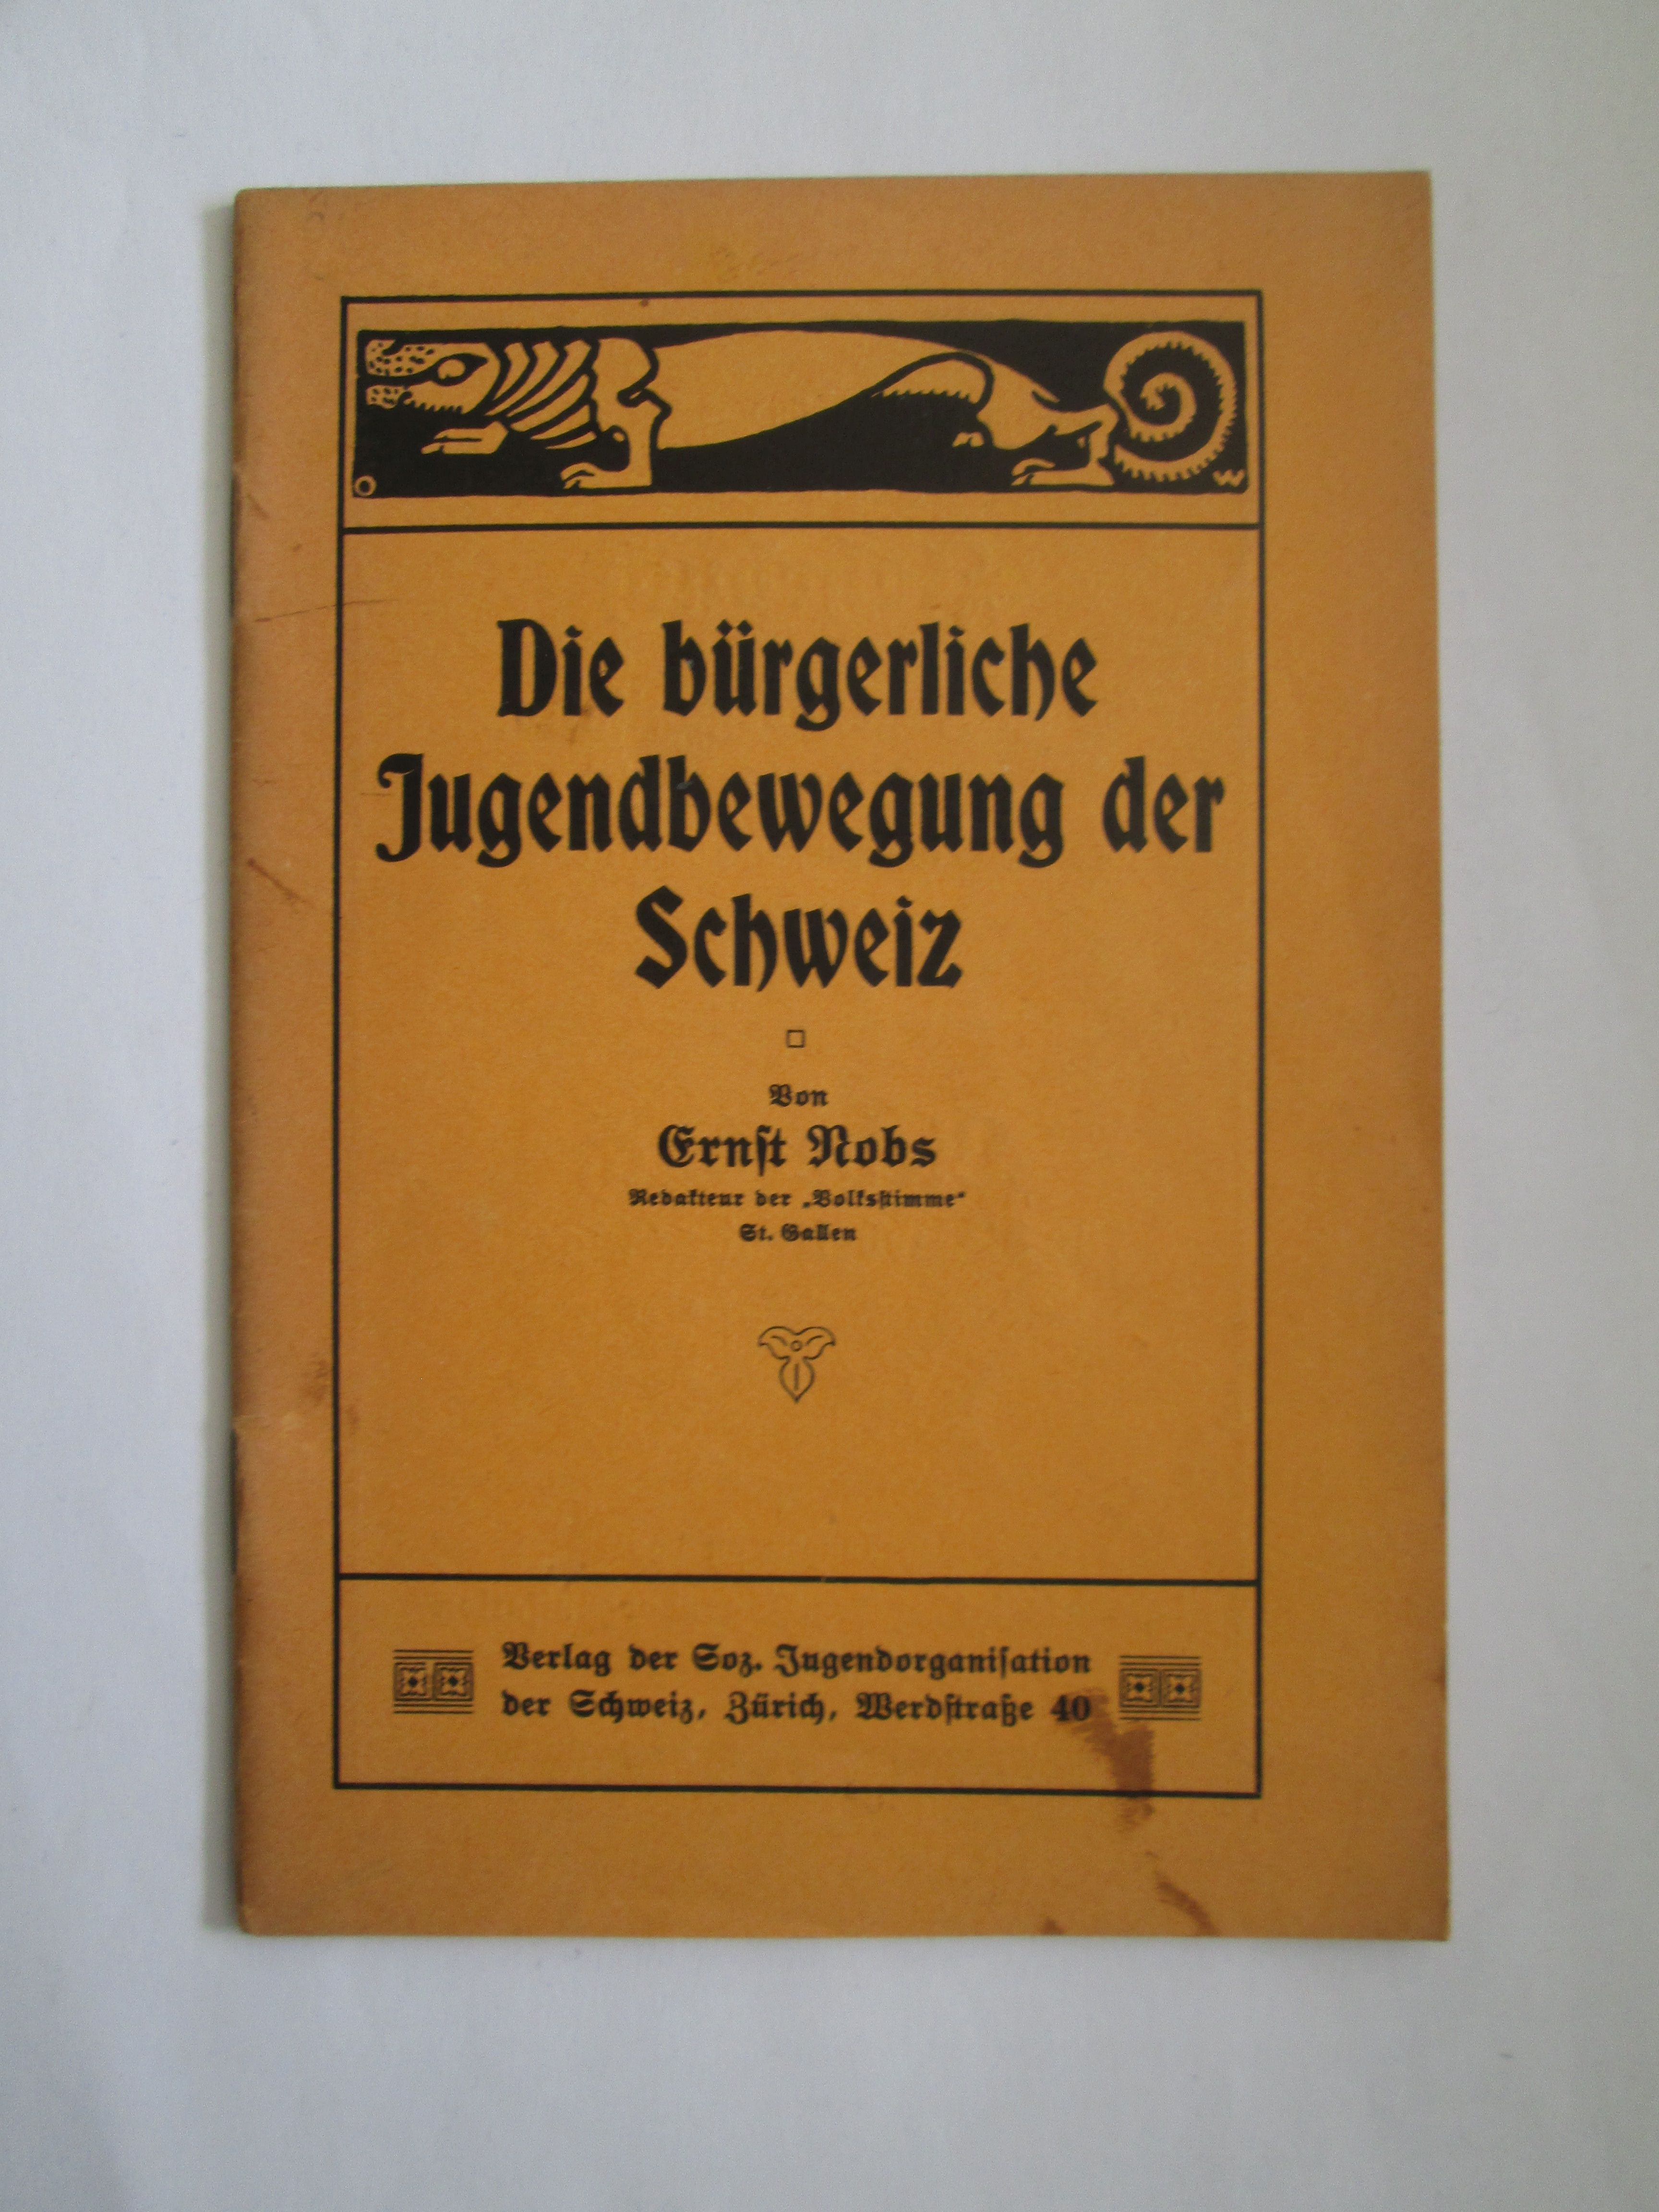 Rätisches Namenbuch : Band II.: Etymologien : Halbband 1 & 2 - Schorta, Andrea [1905-1990] ; editor